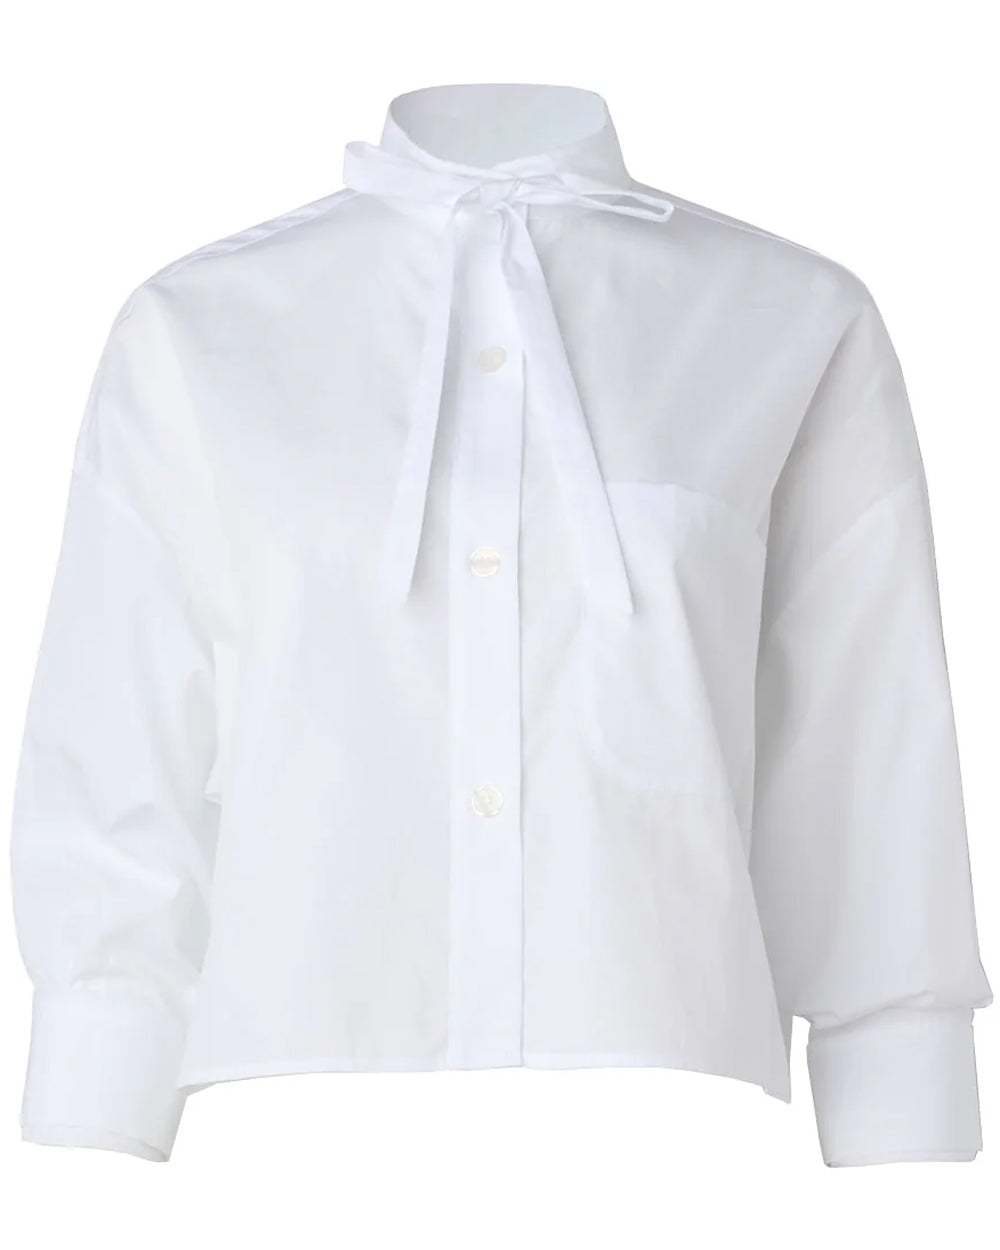 White Darling Shirt